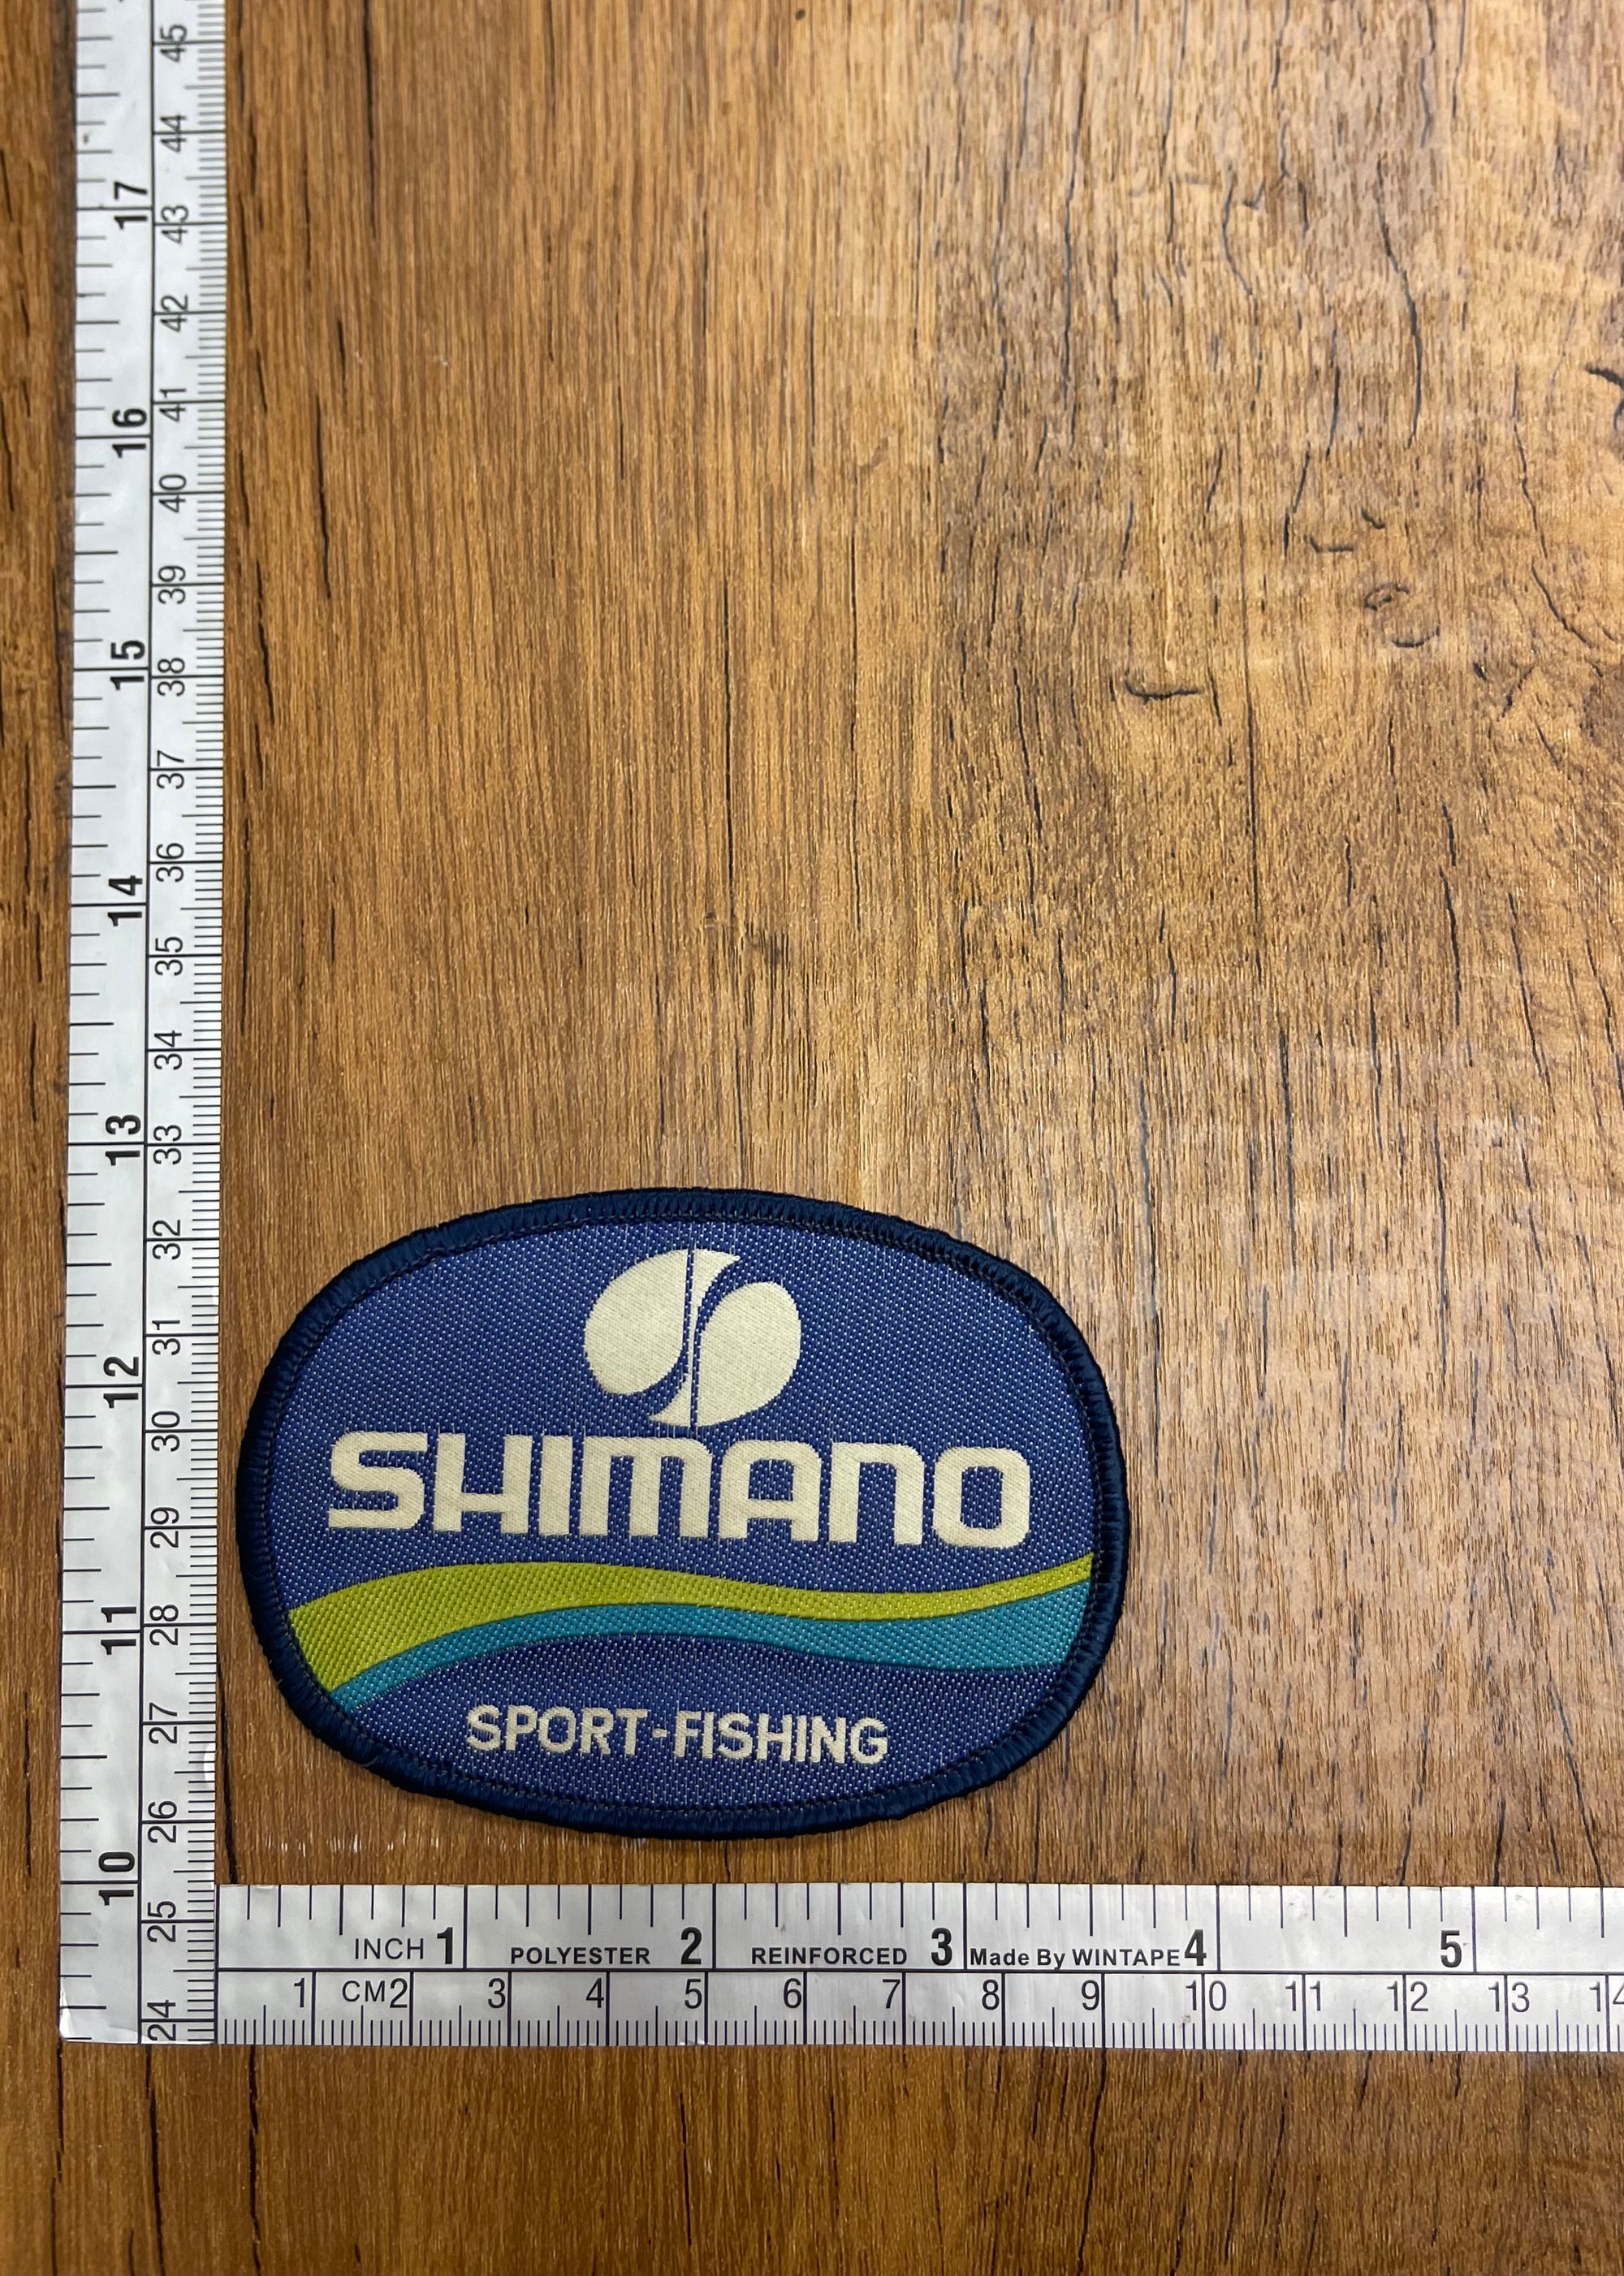 Shimano Sport-Fishing